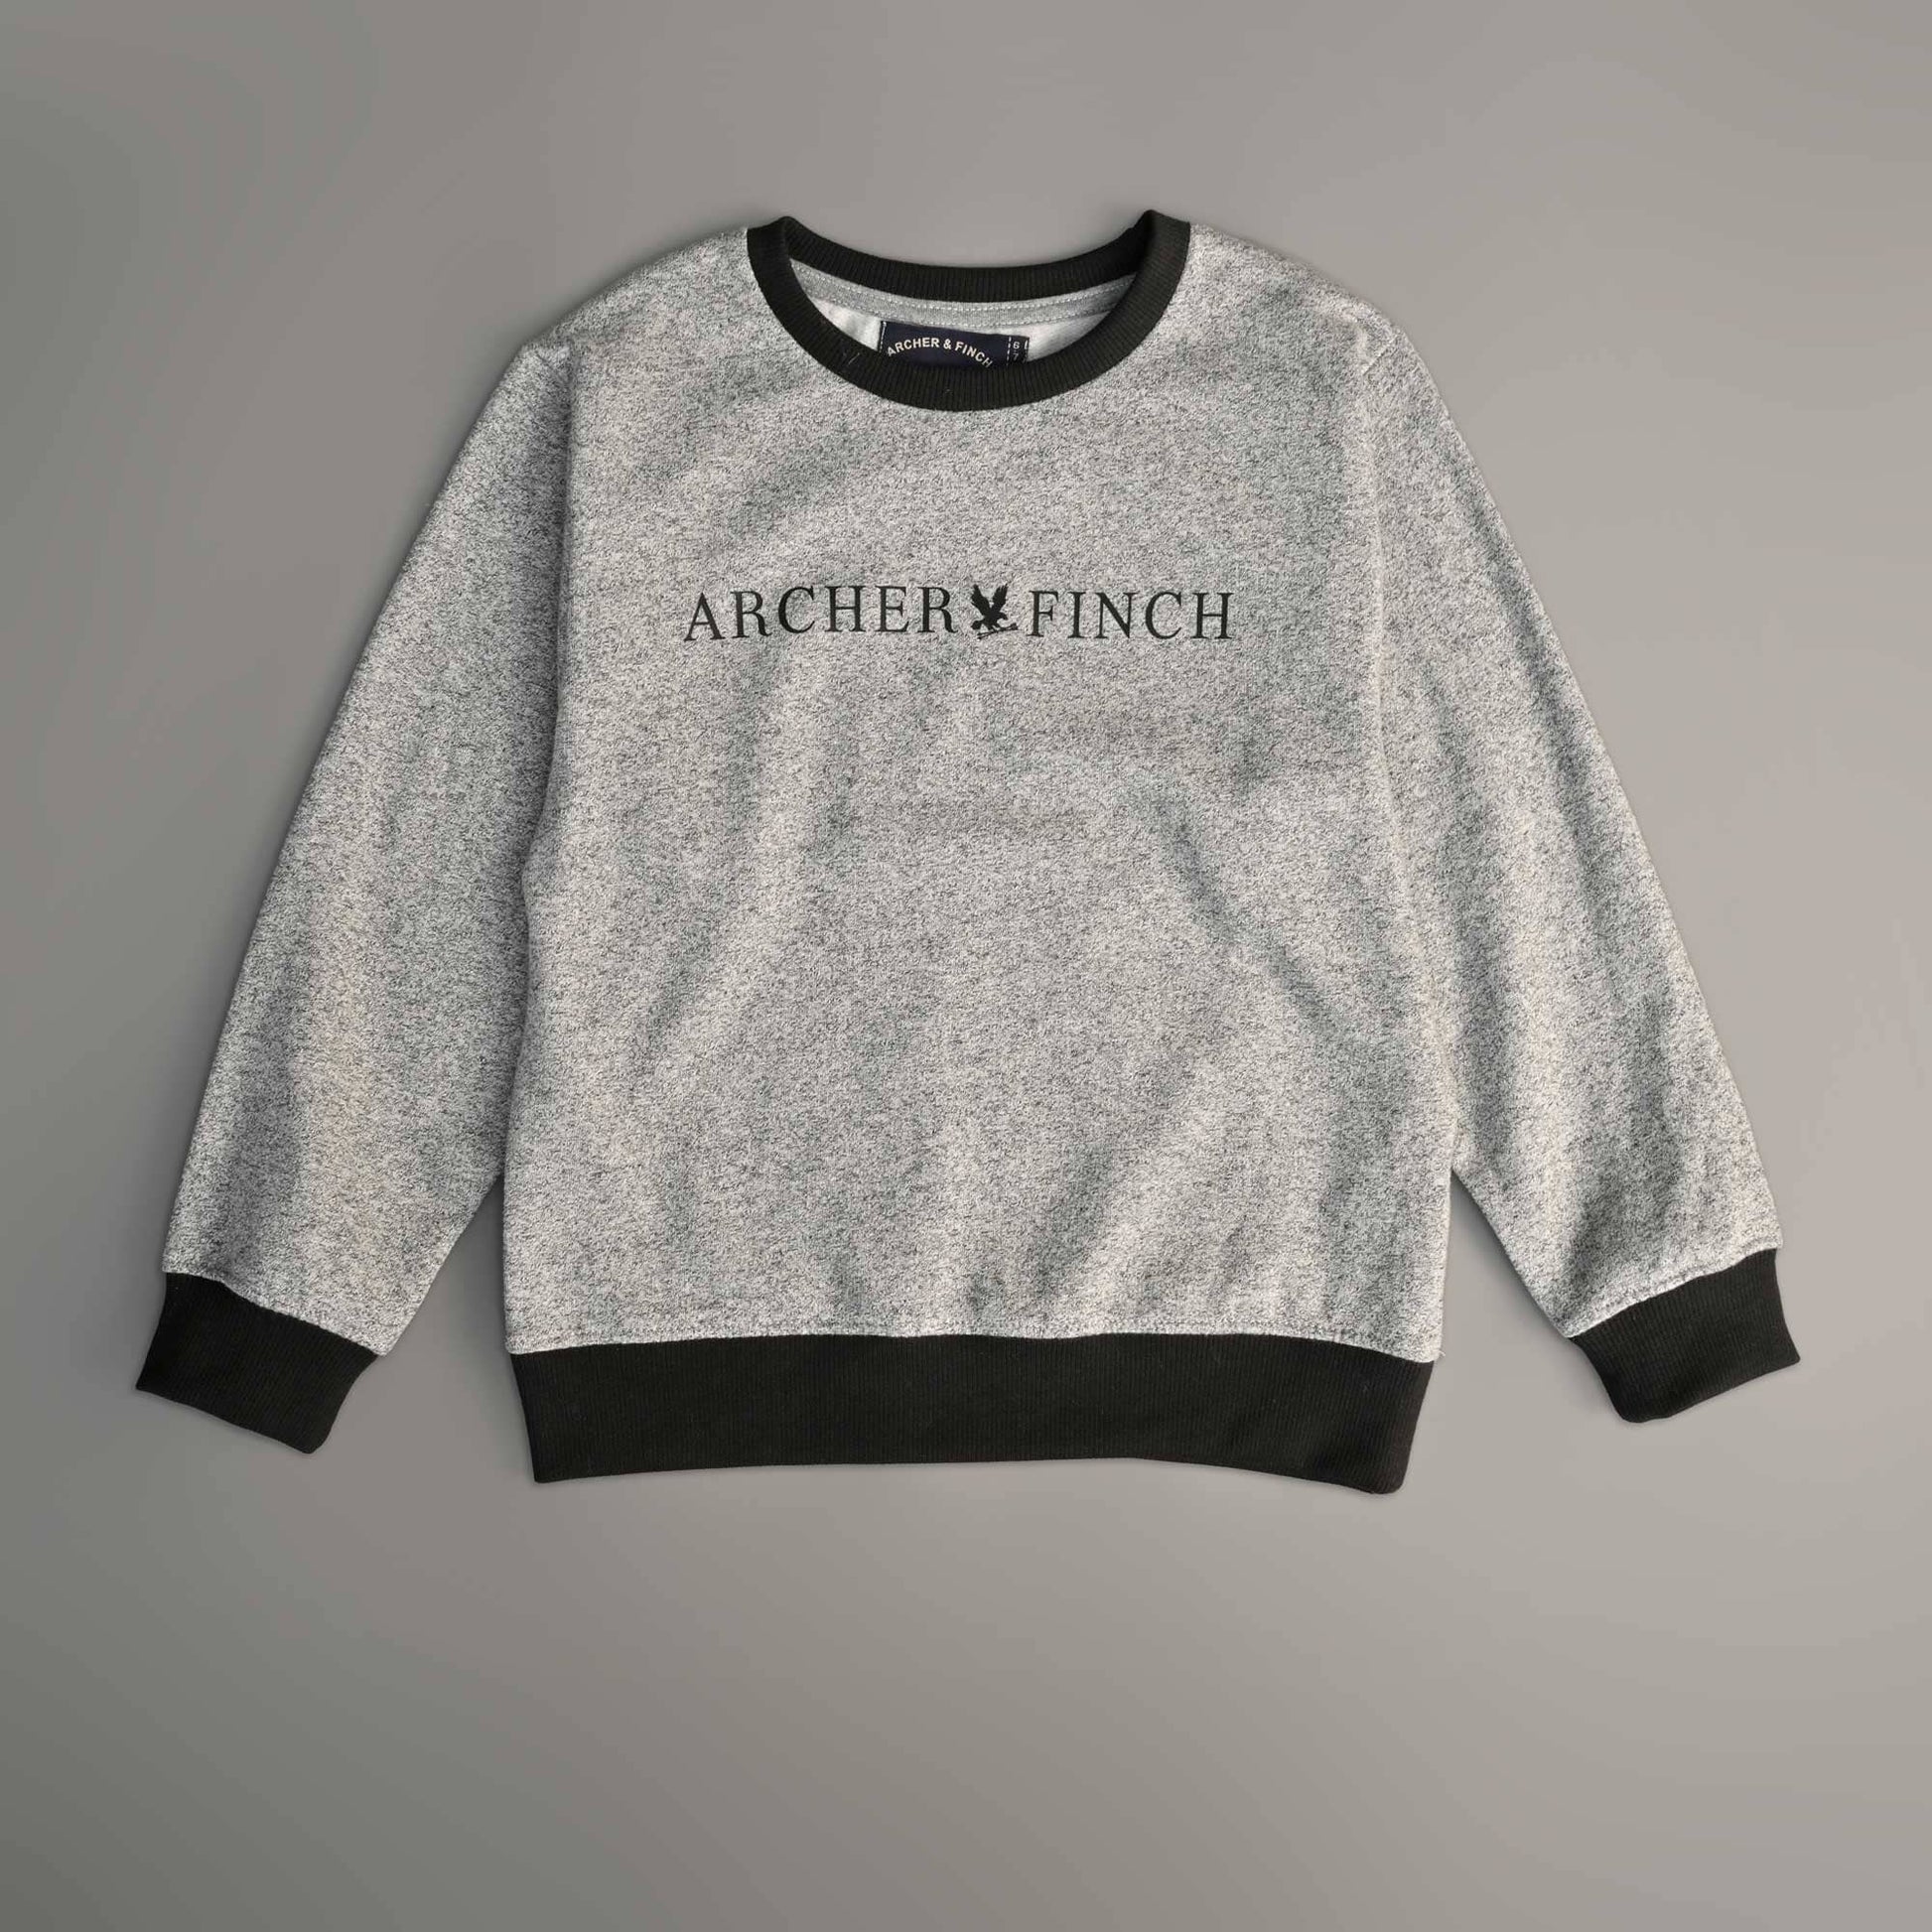 A&F Boy's Archer & Finch Printed Fleece Sweat Shirt Boy's Sweat Shirt LFS Grey Marl 3-4 Years 